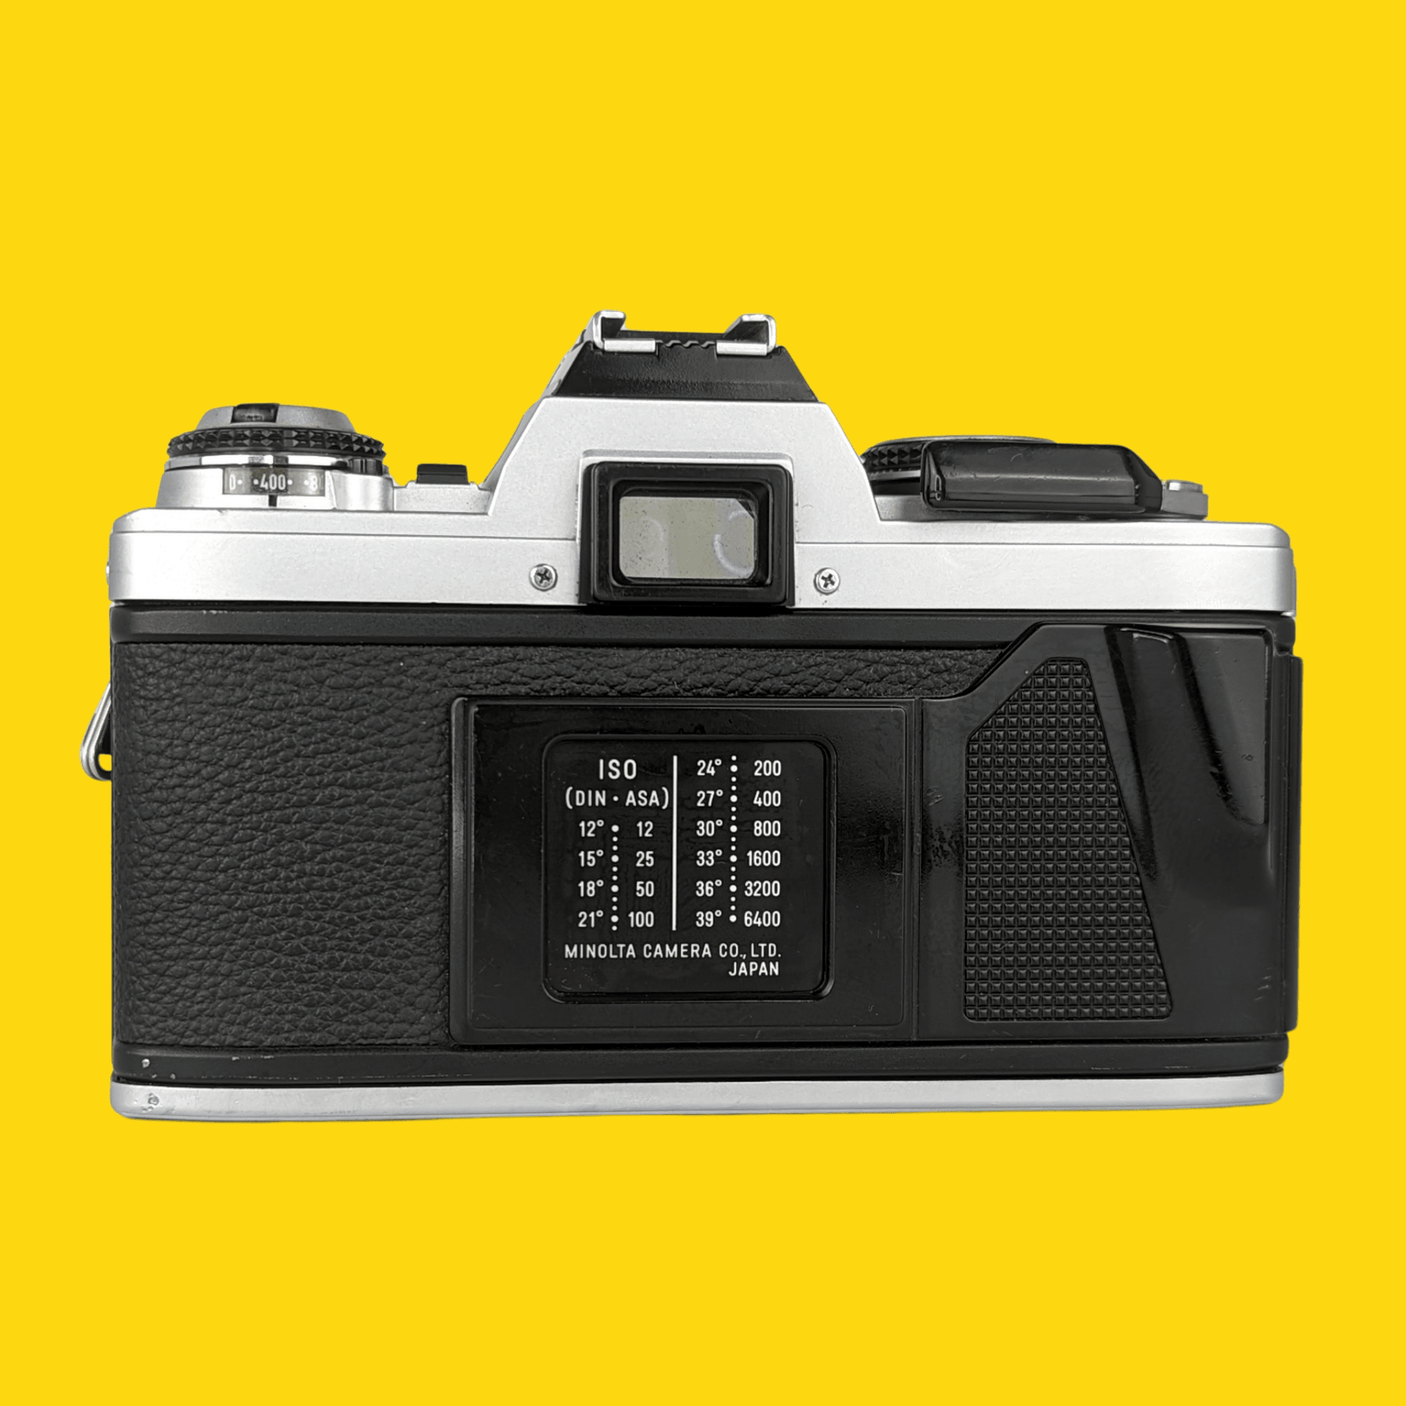 Minolta X-500 SLR 35mm Film Camera with Auto Zoom Lens